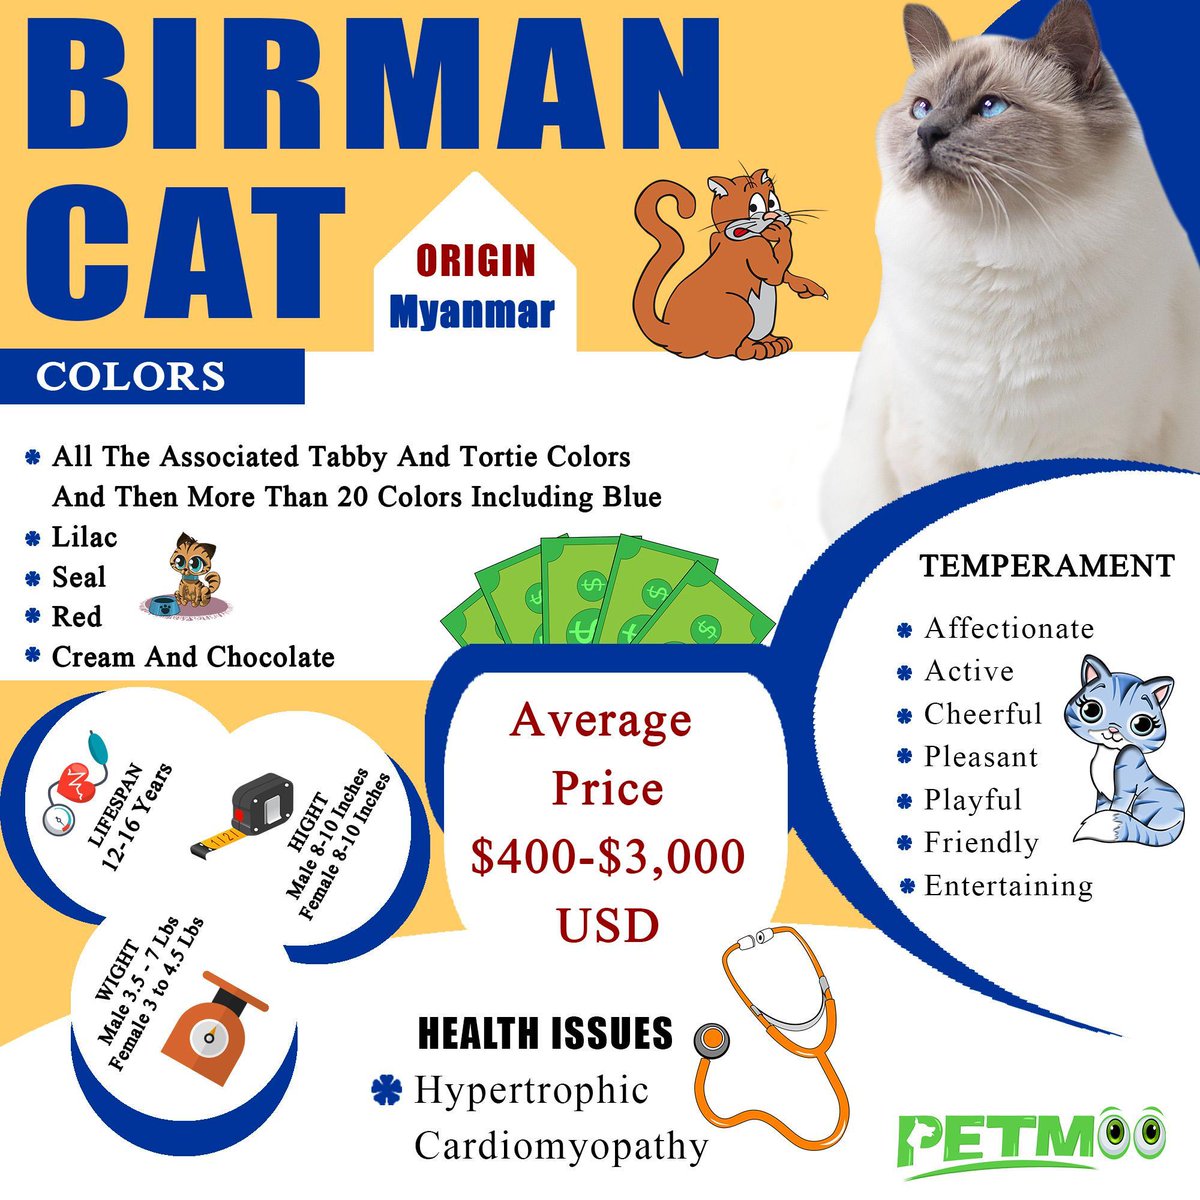 Birman Cat Infographic
Birman Cat Breed: Characteristics And Personality
petmoo.com/cats/birman-ca…
#petmoo #pets #cats #catbreeds #birmancat #birmancatbreeds #birmancatinfographic